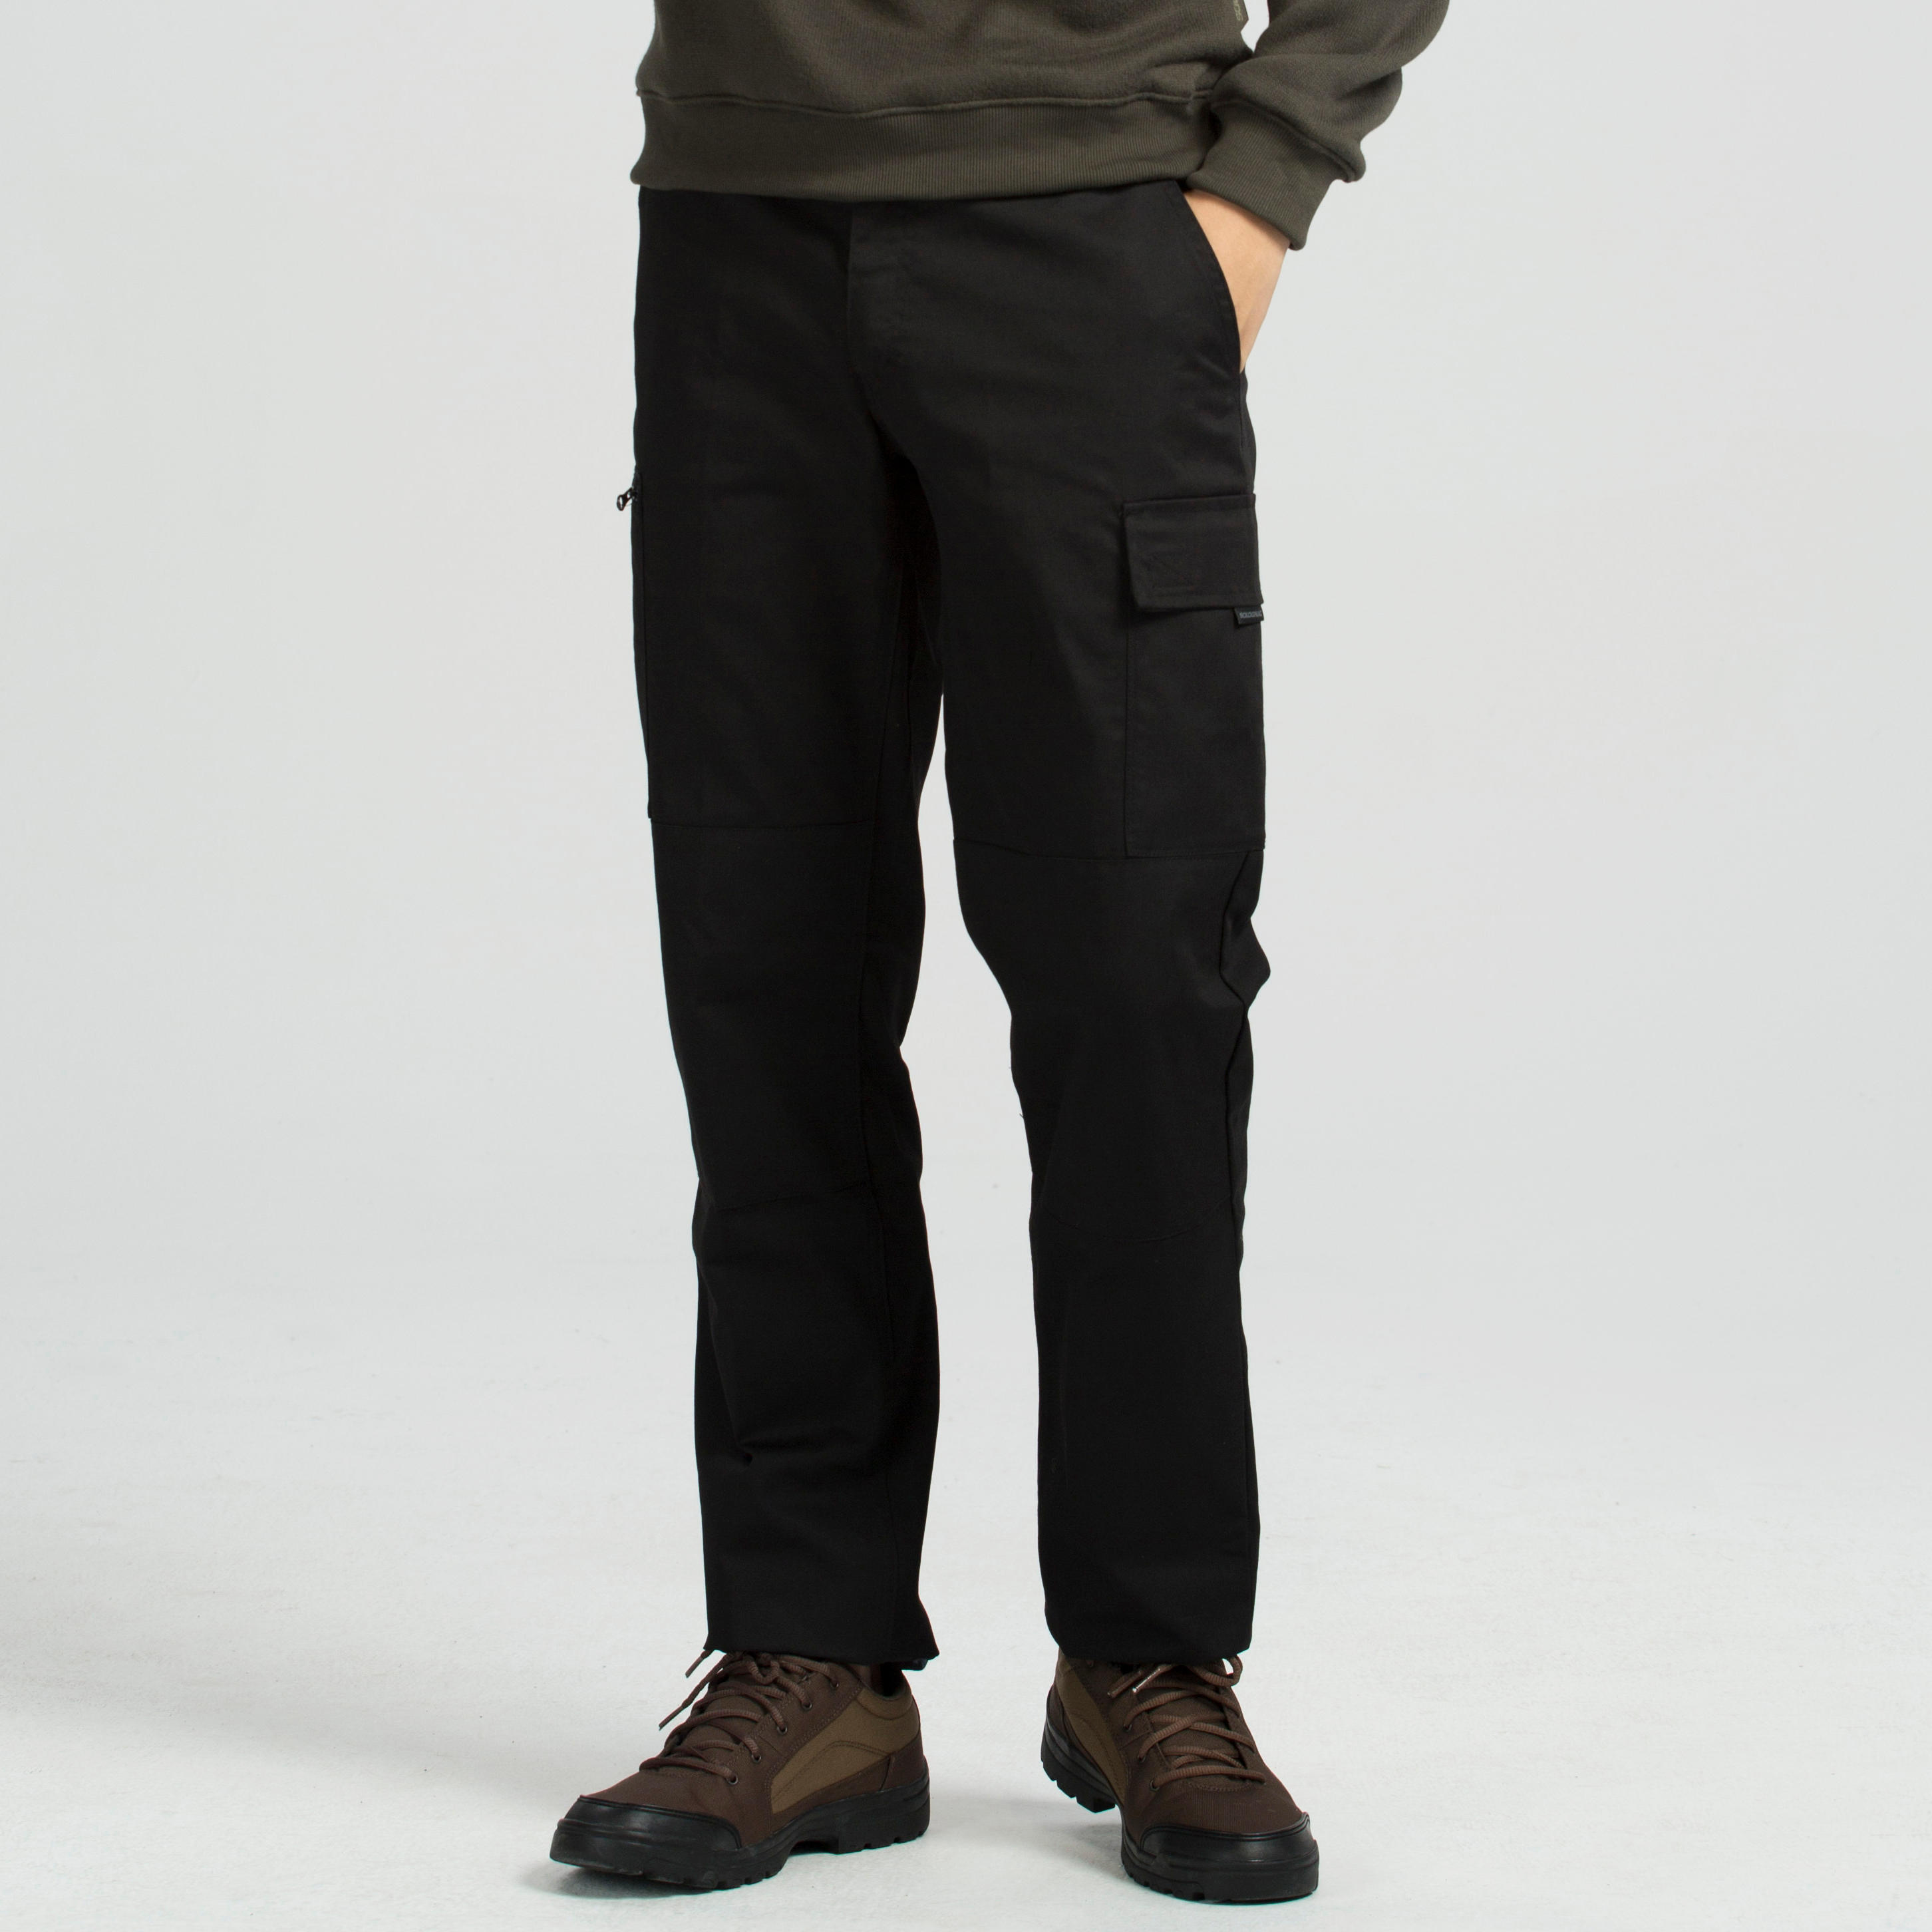 Decathlon trouser| Men's Breathable Trousers Pants SG-500 Khaki | Decathlon  cargo pant - YouTube